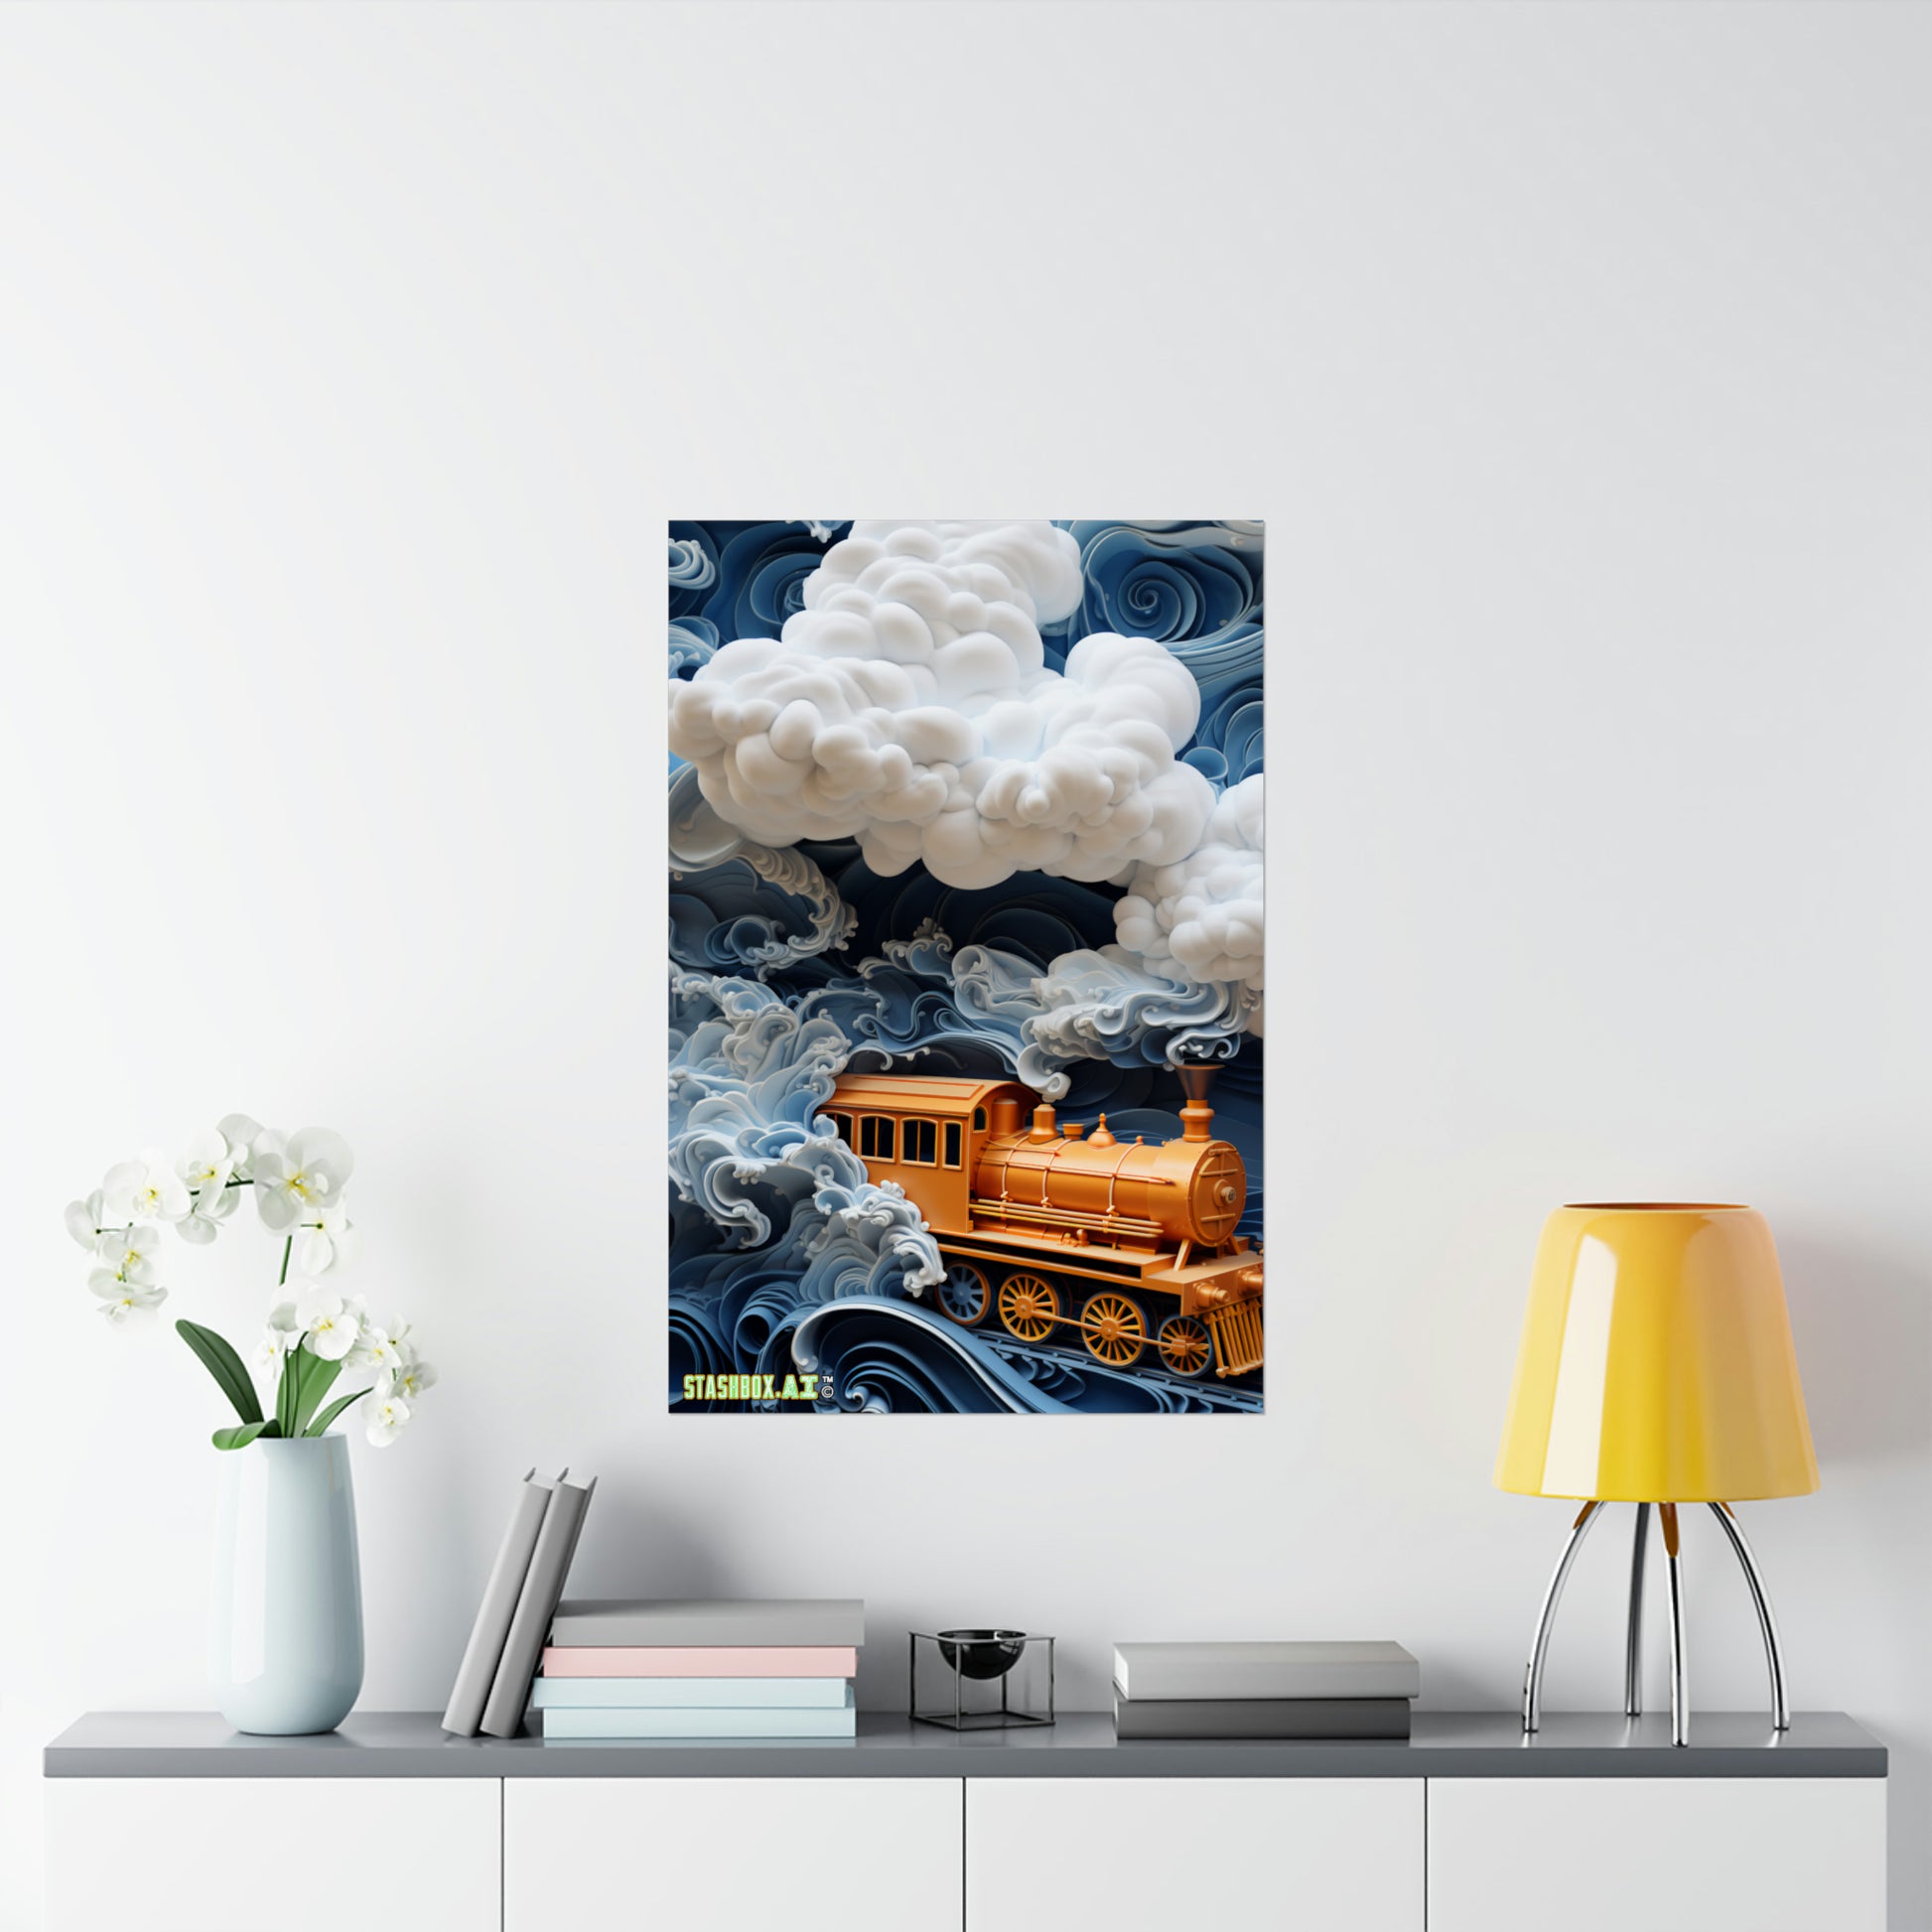 Realistic & Fantastical Train in Clouds Vertical Poster